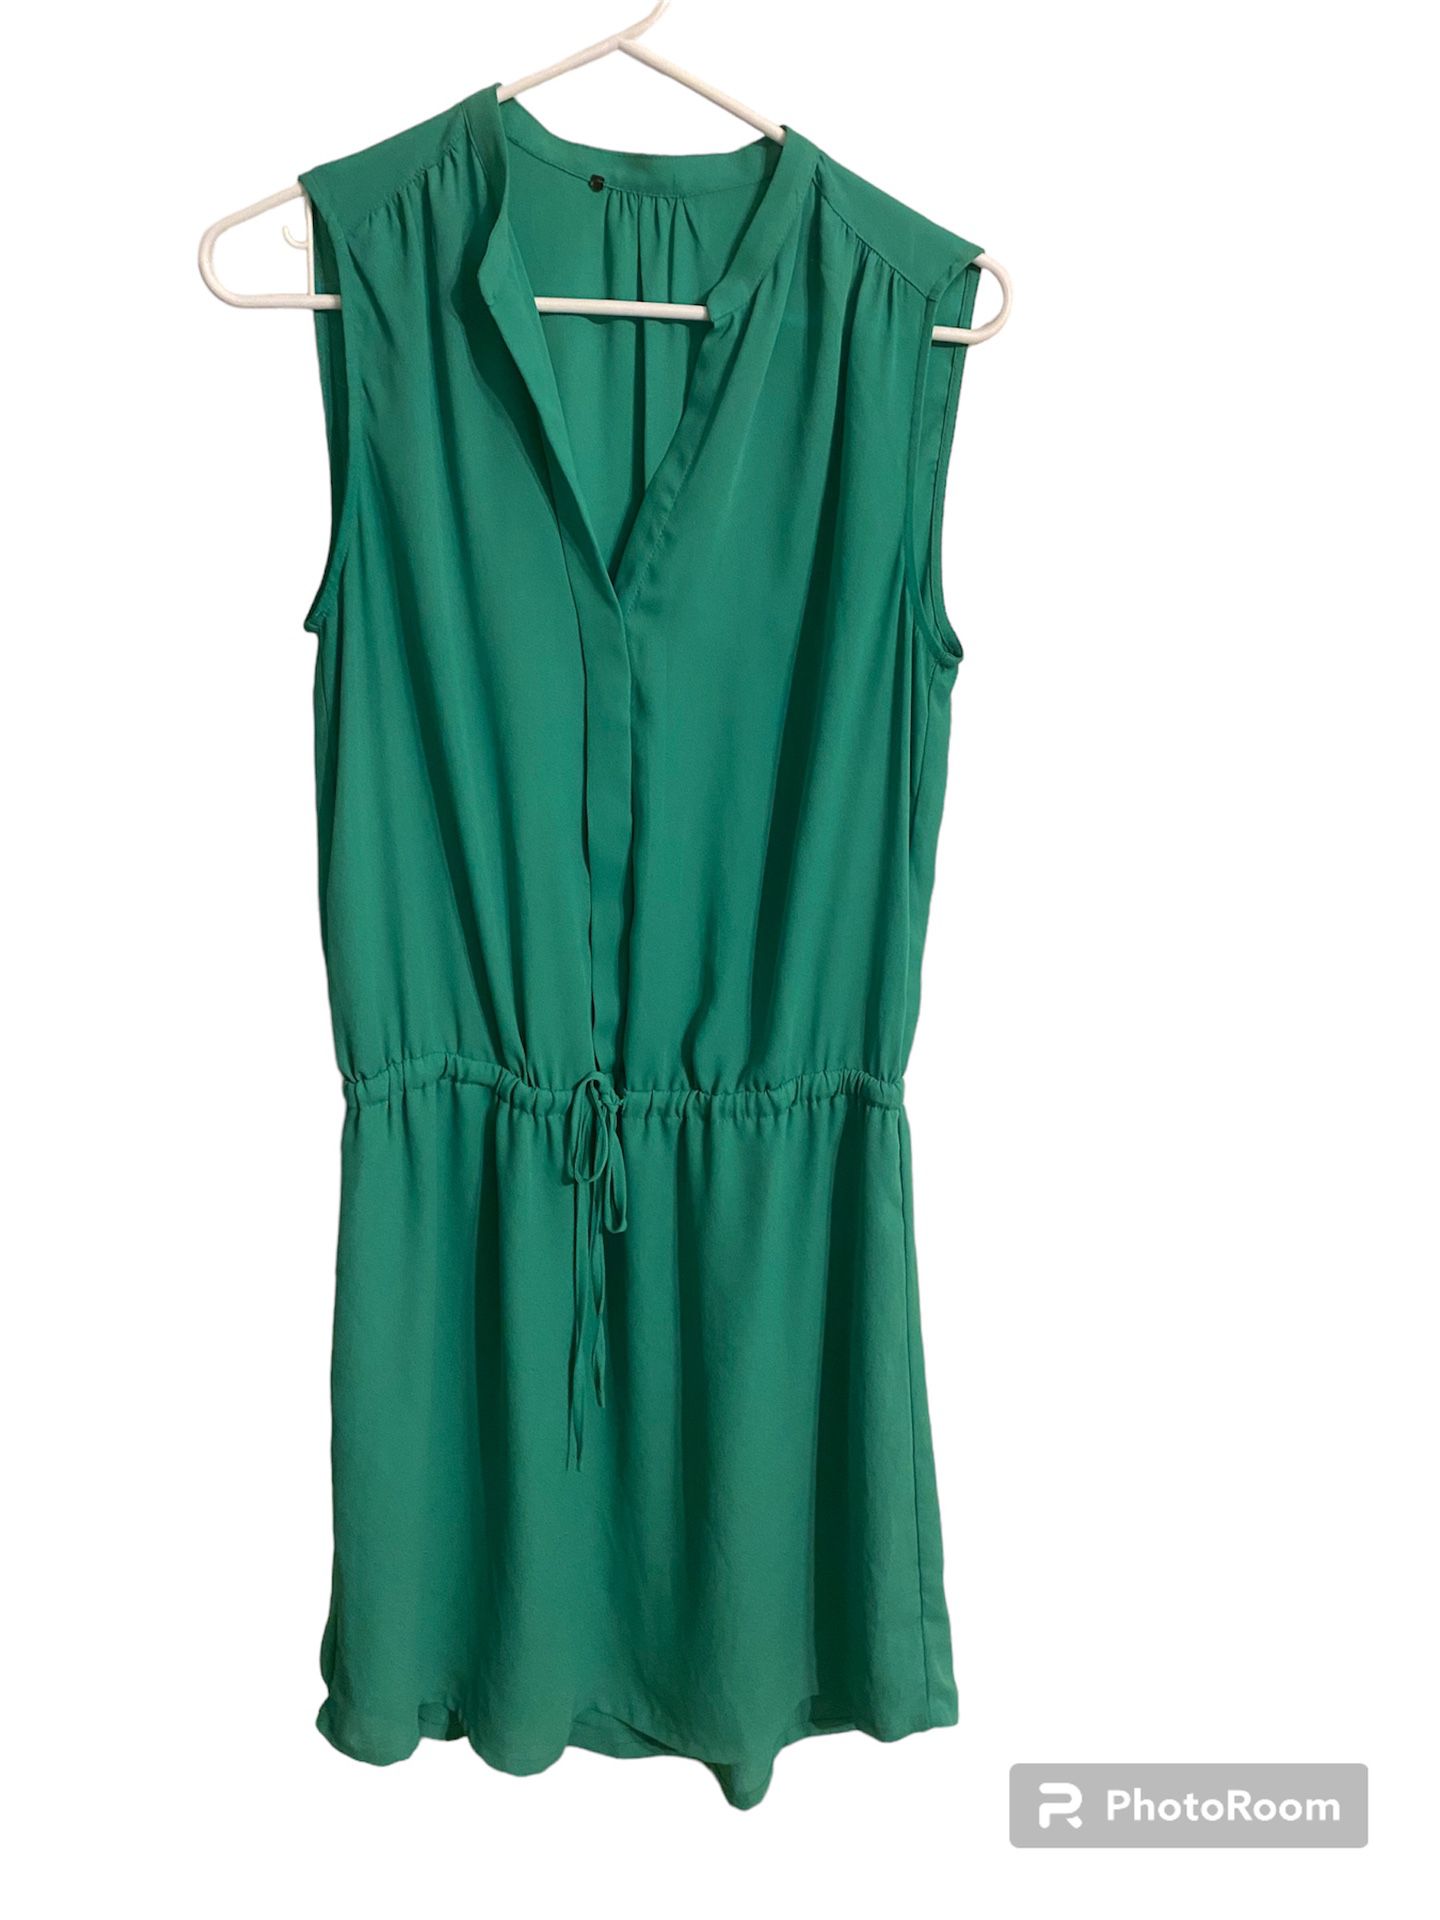 Green Sleeveless Dress With Drawstring Waist, Size 2